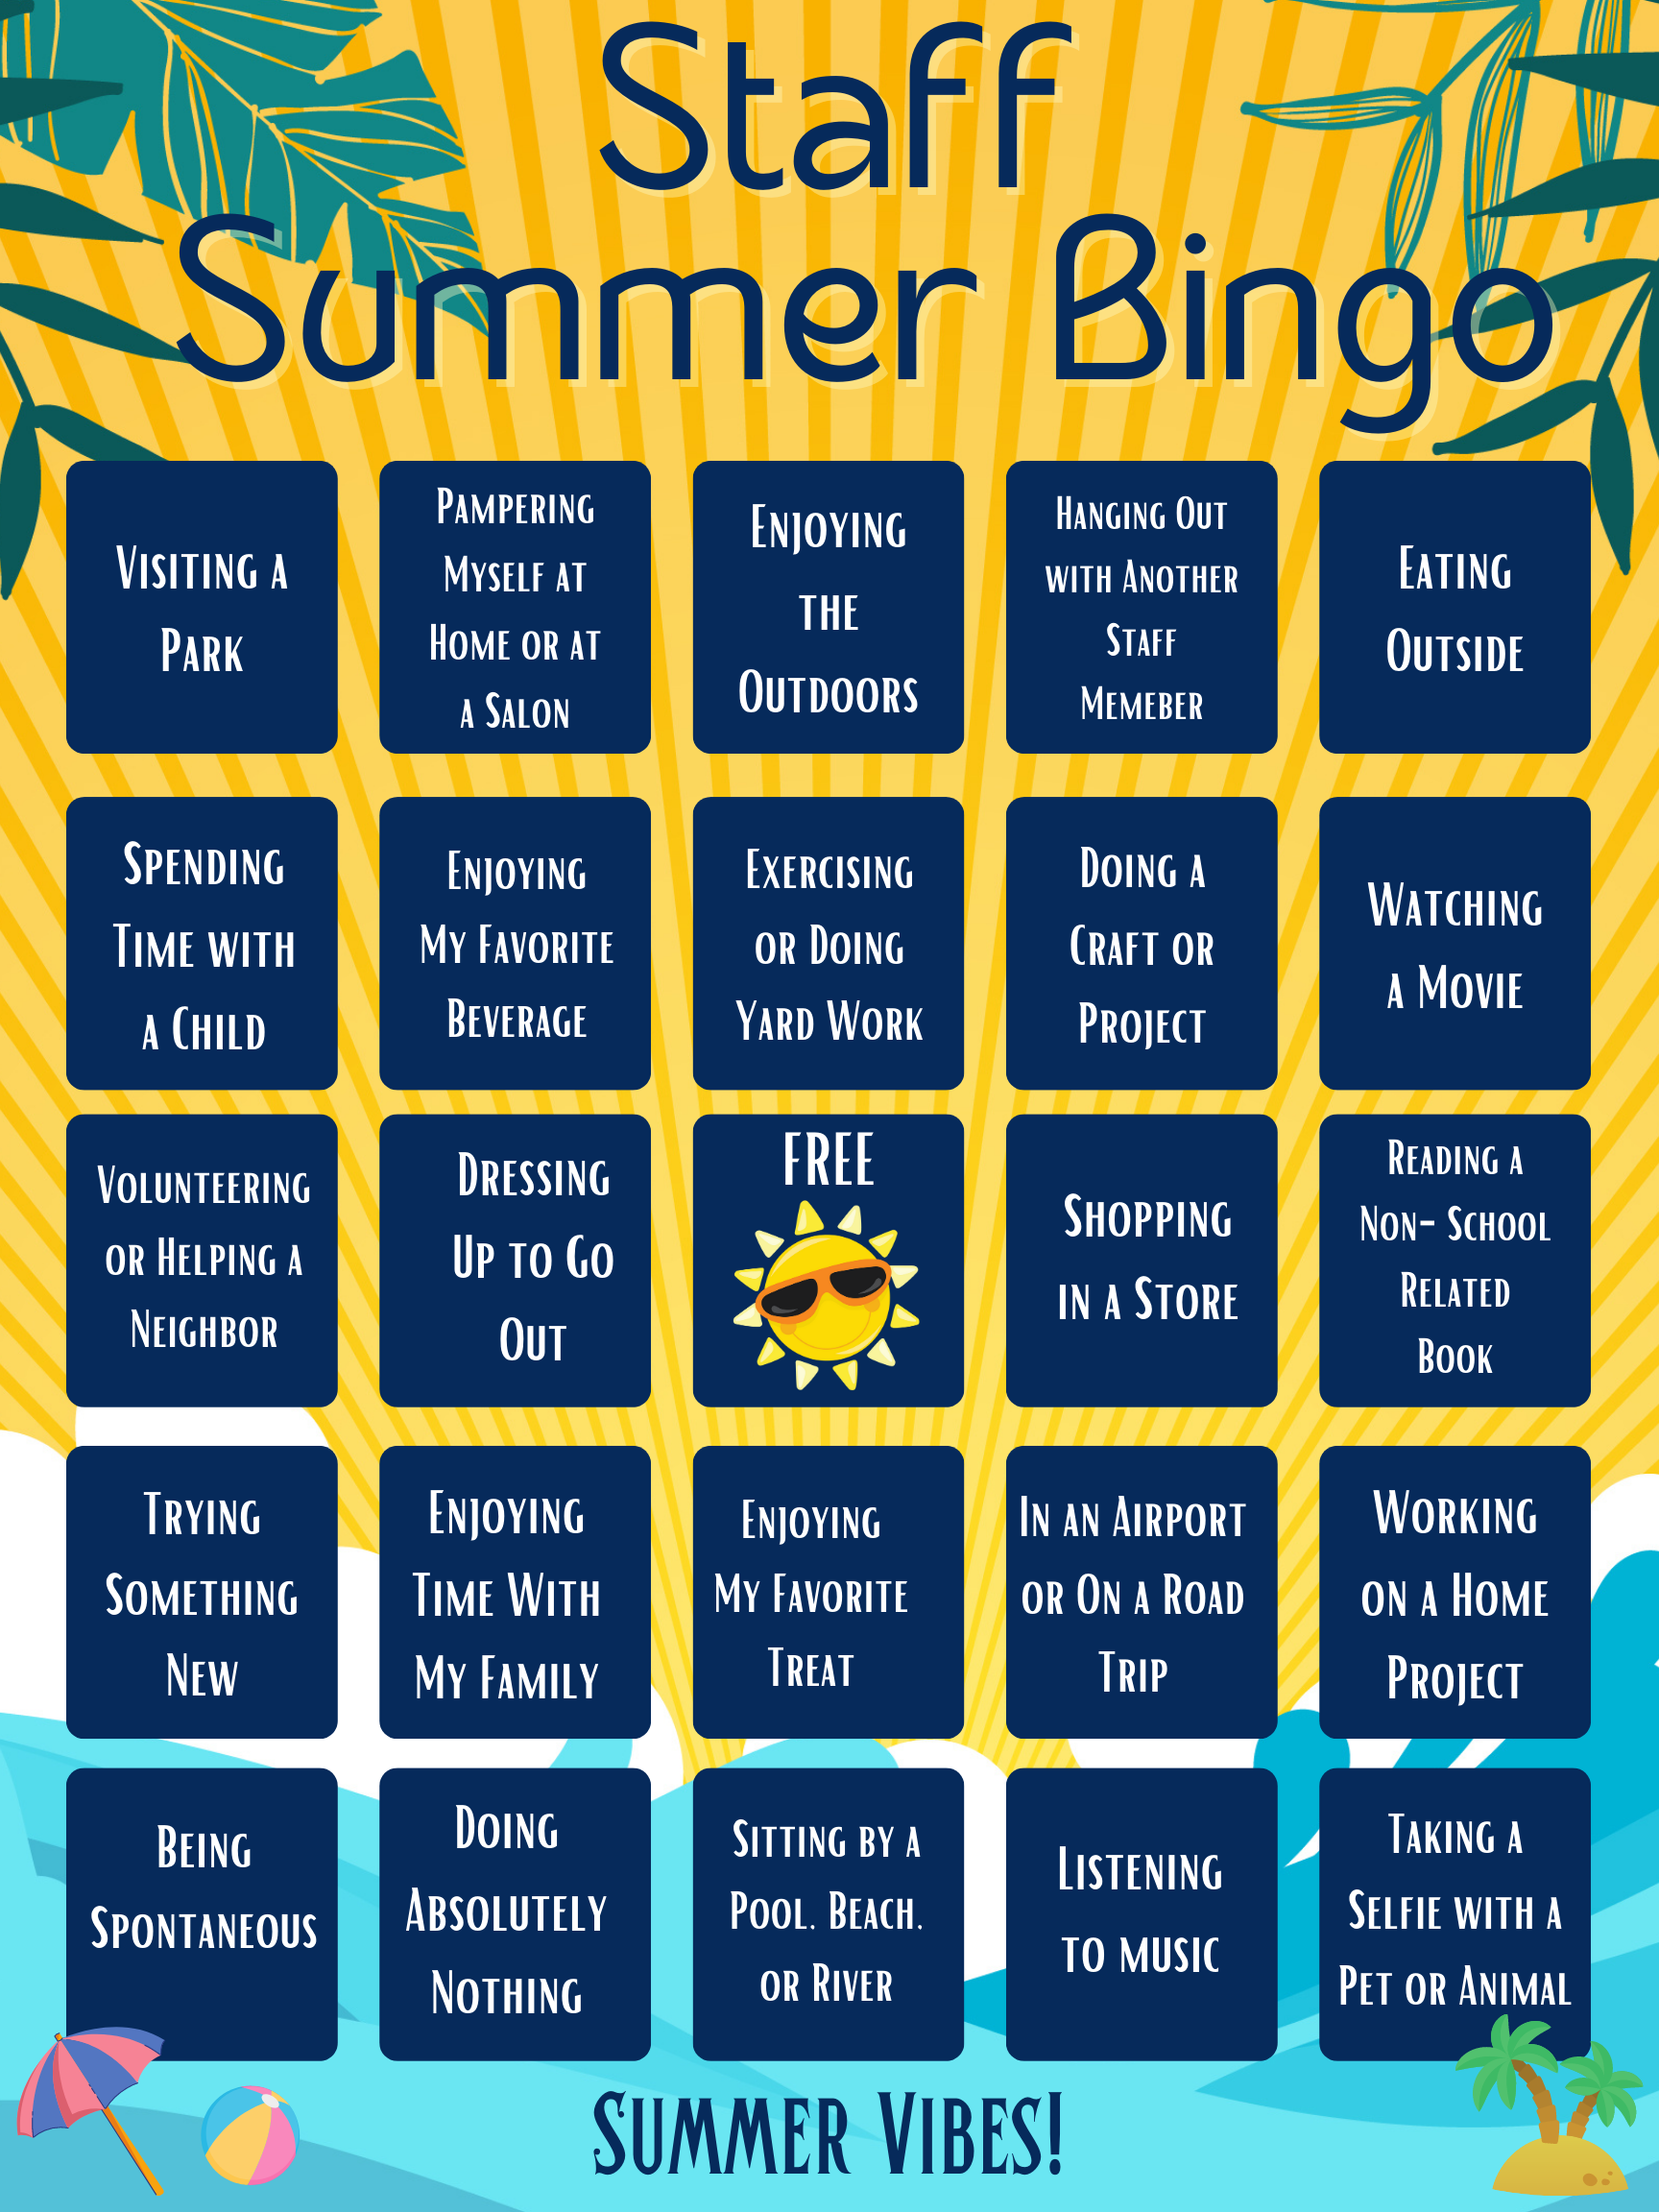 icebreaker-games-for-staff-summer-staff-bingo-technotes-blog